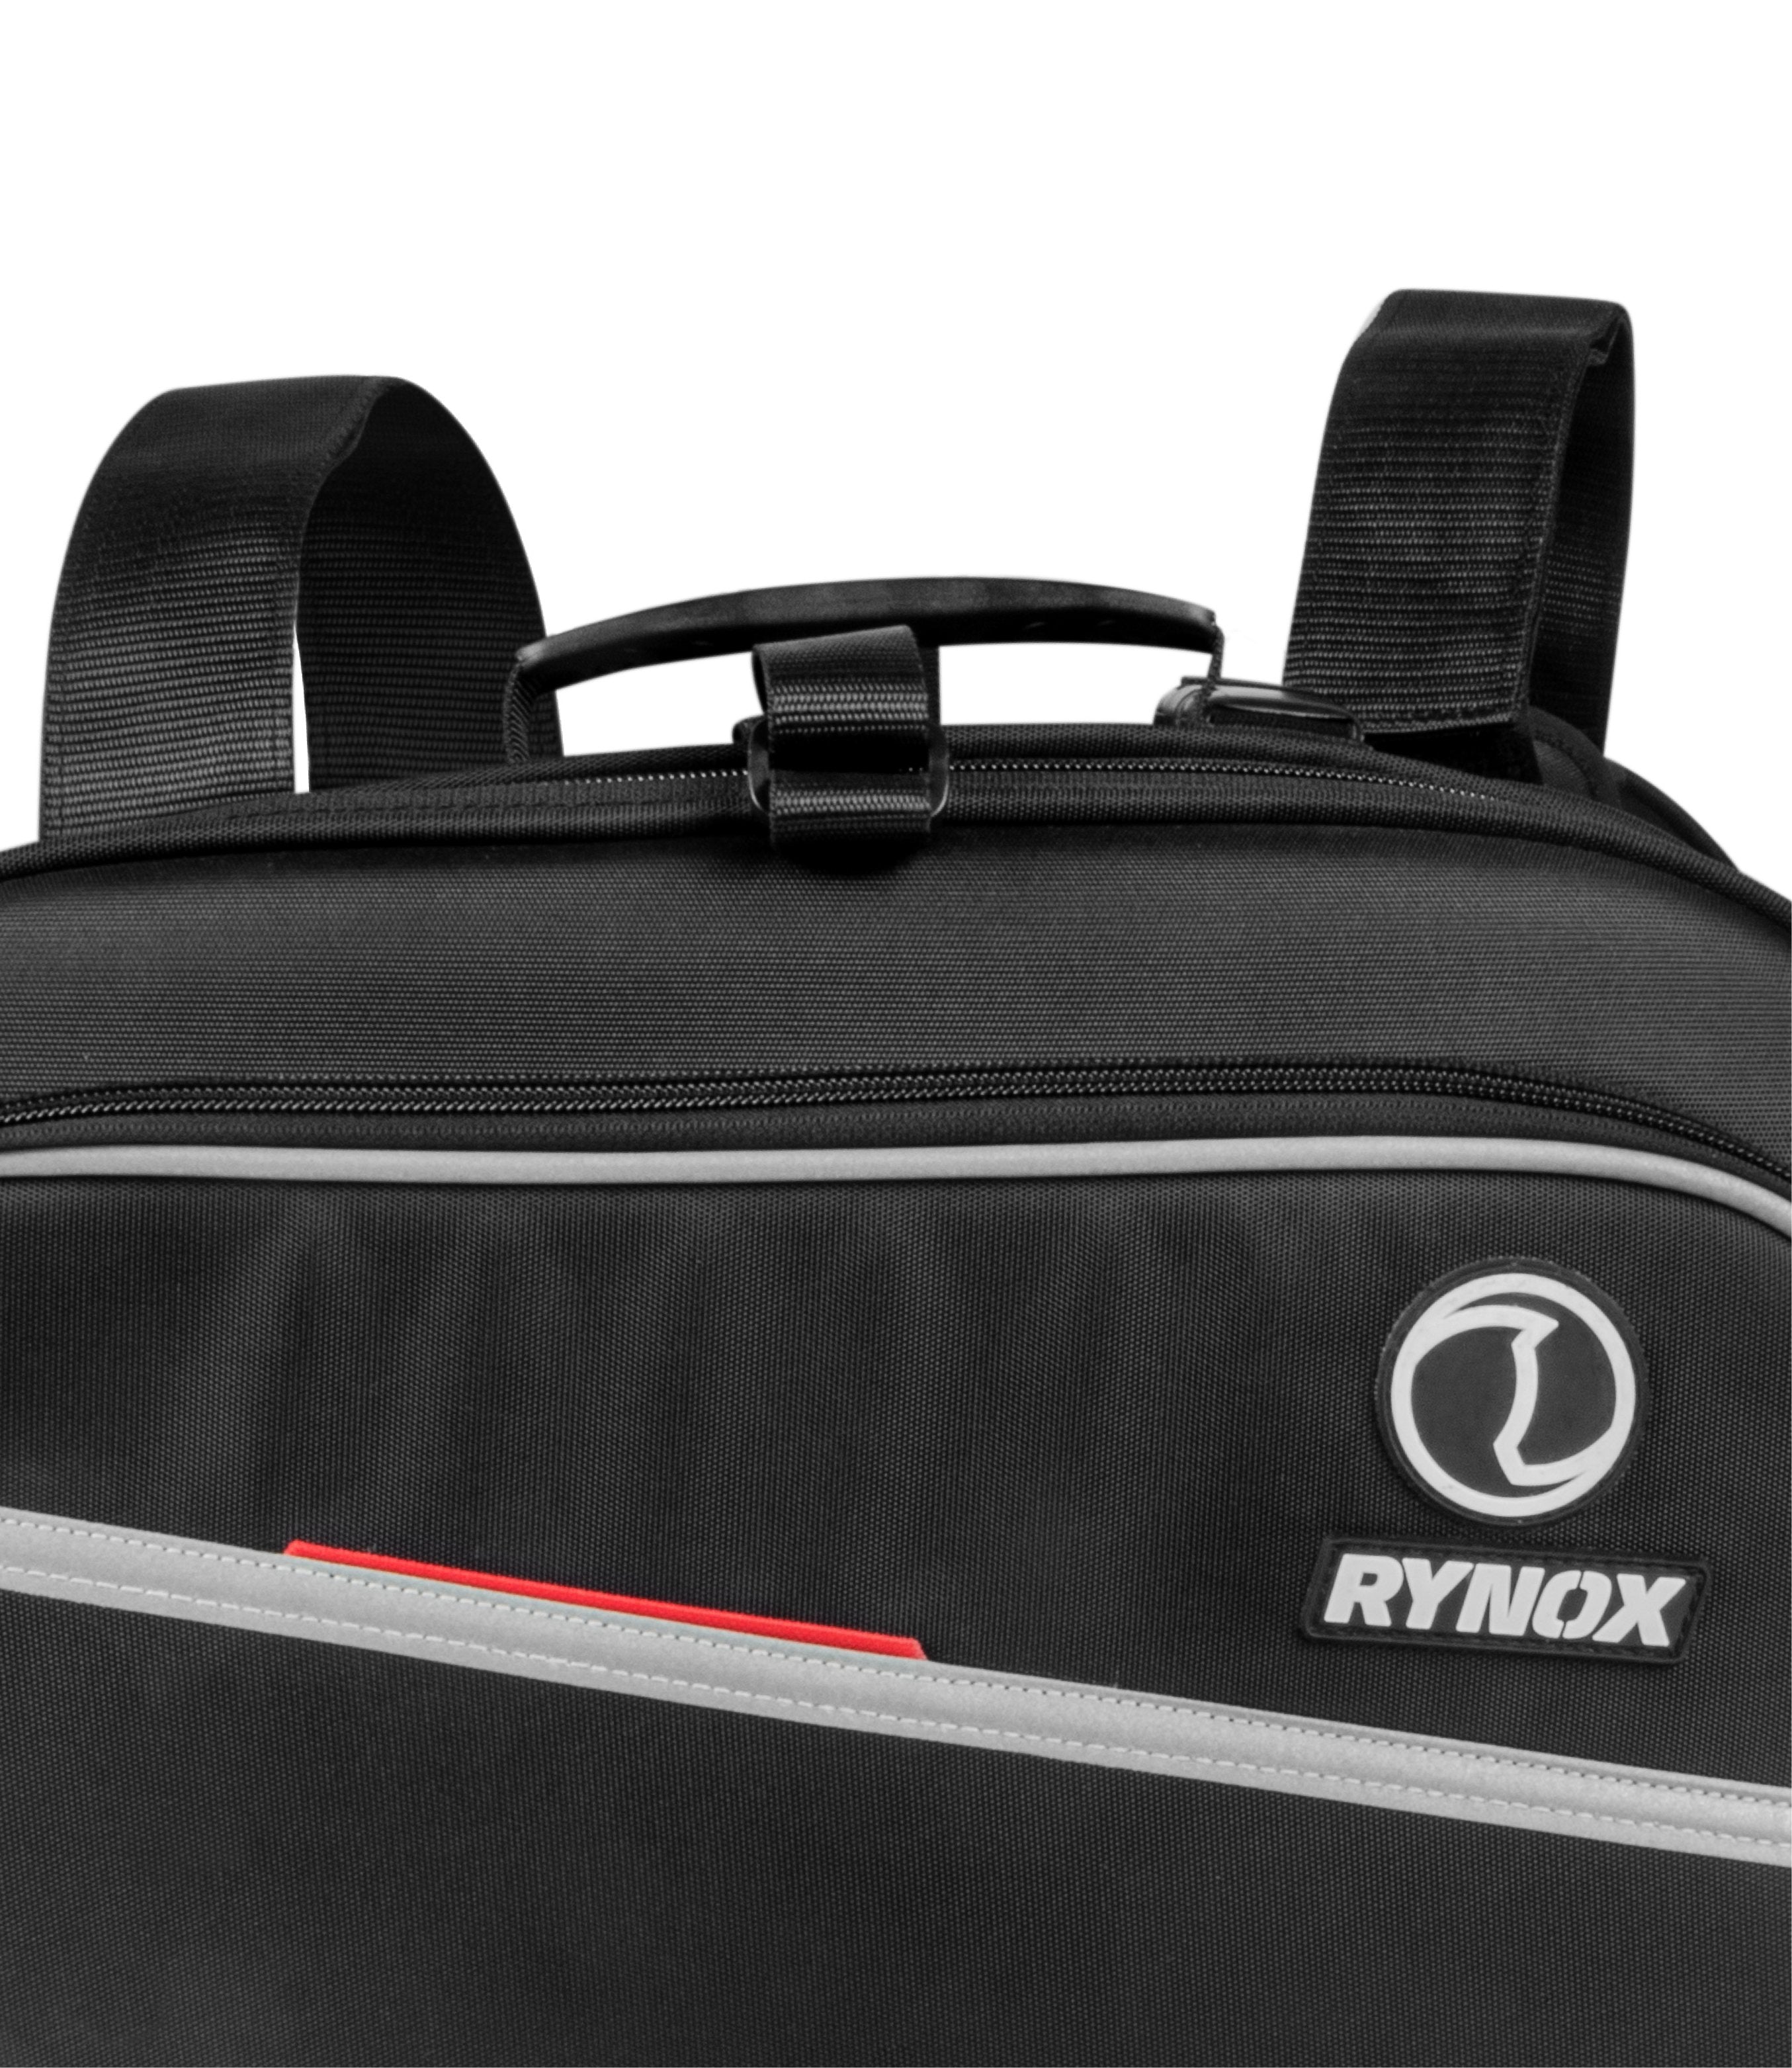 RYNOX NOMAD SADDLE BAG  Bags Saddle bags Camera bag